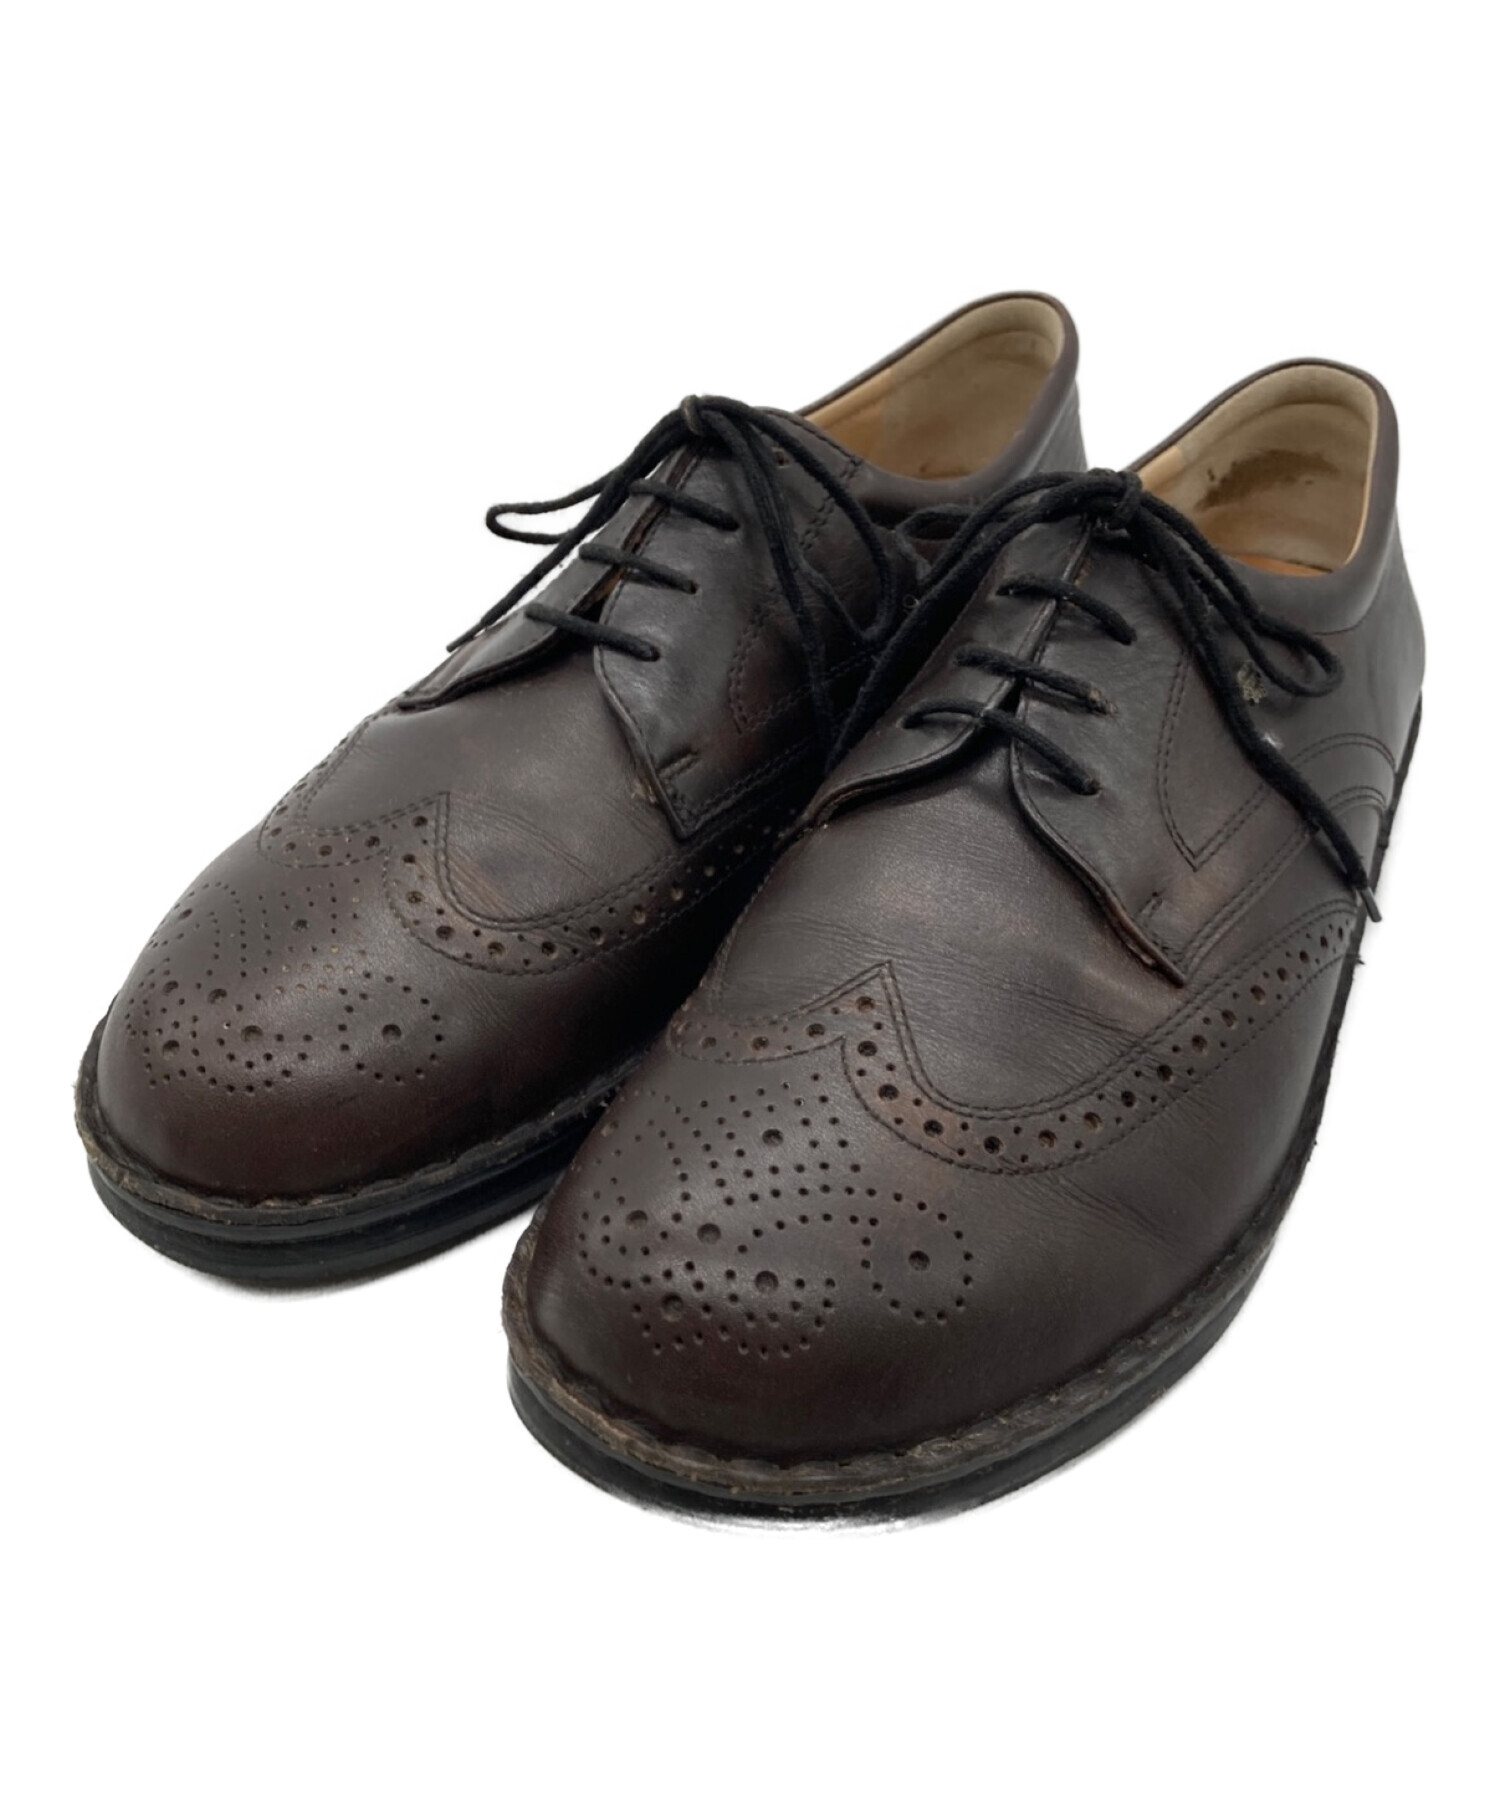 Finn Comfort靴（黒革）